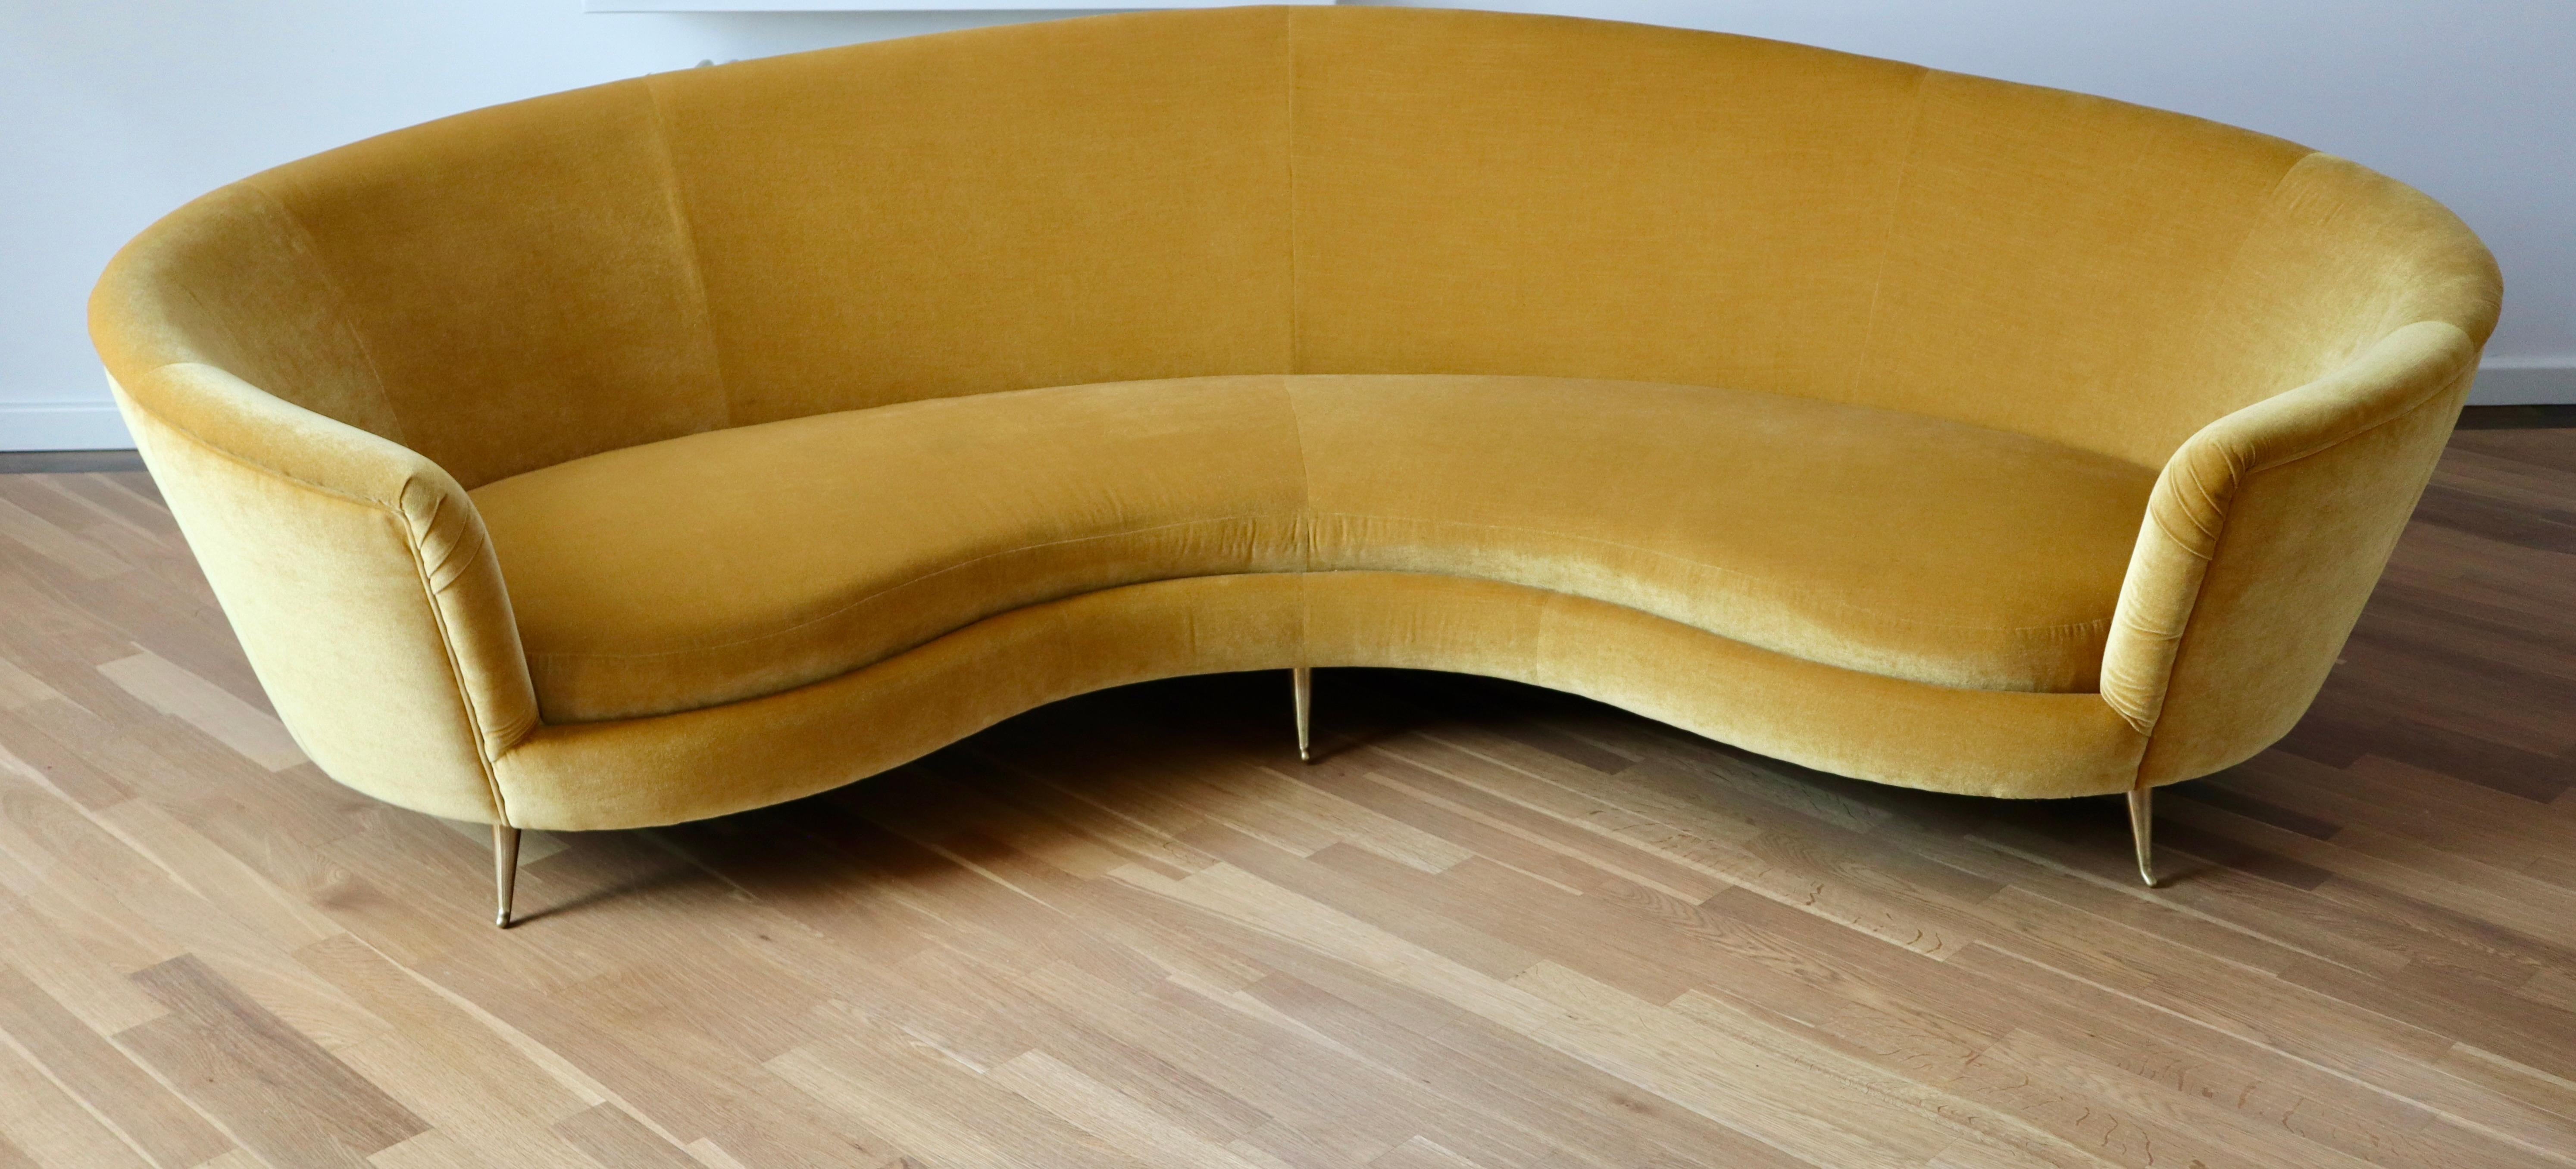 Contemporary XXL Gio Ponti Style Large Mid Century Modern Italian Crescent Canapé Sofa For Sale